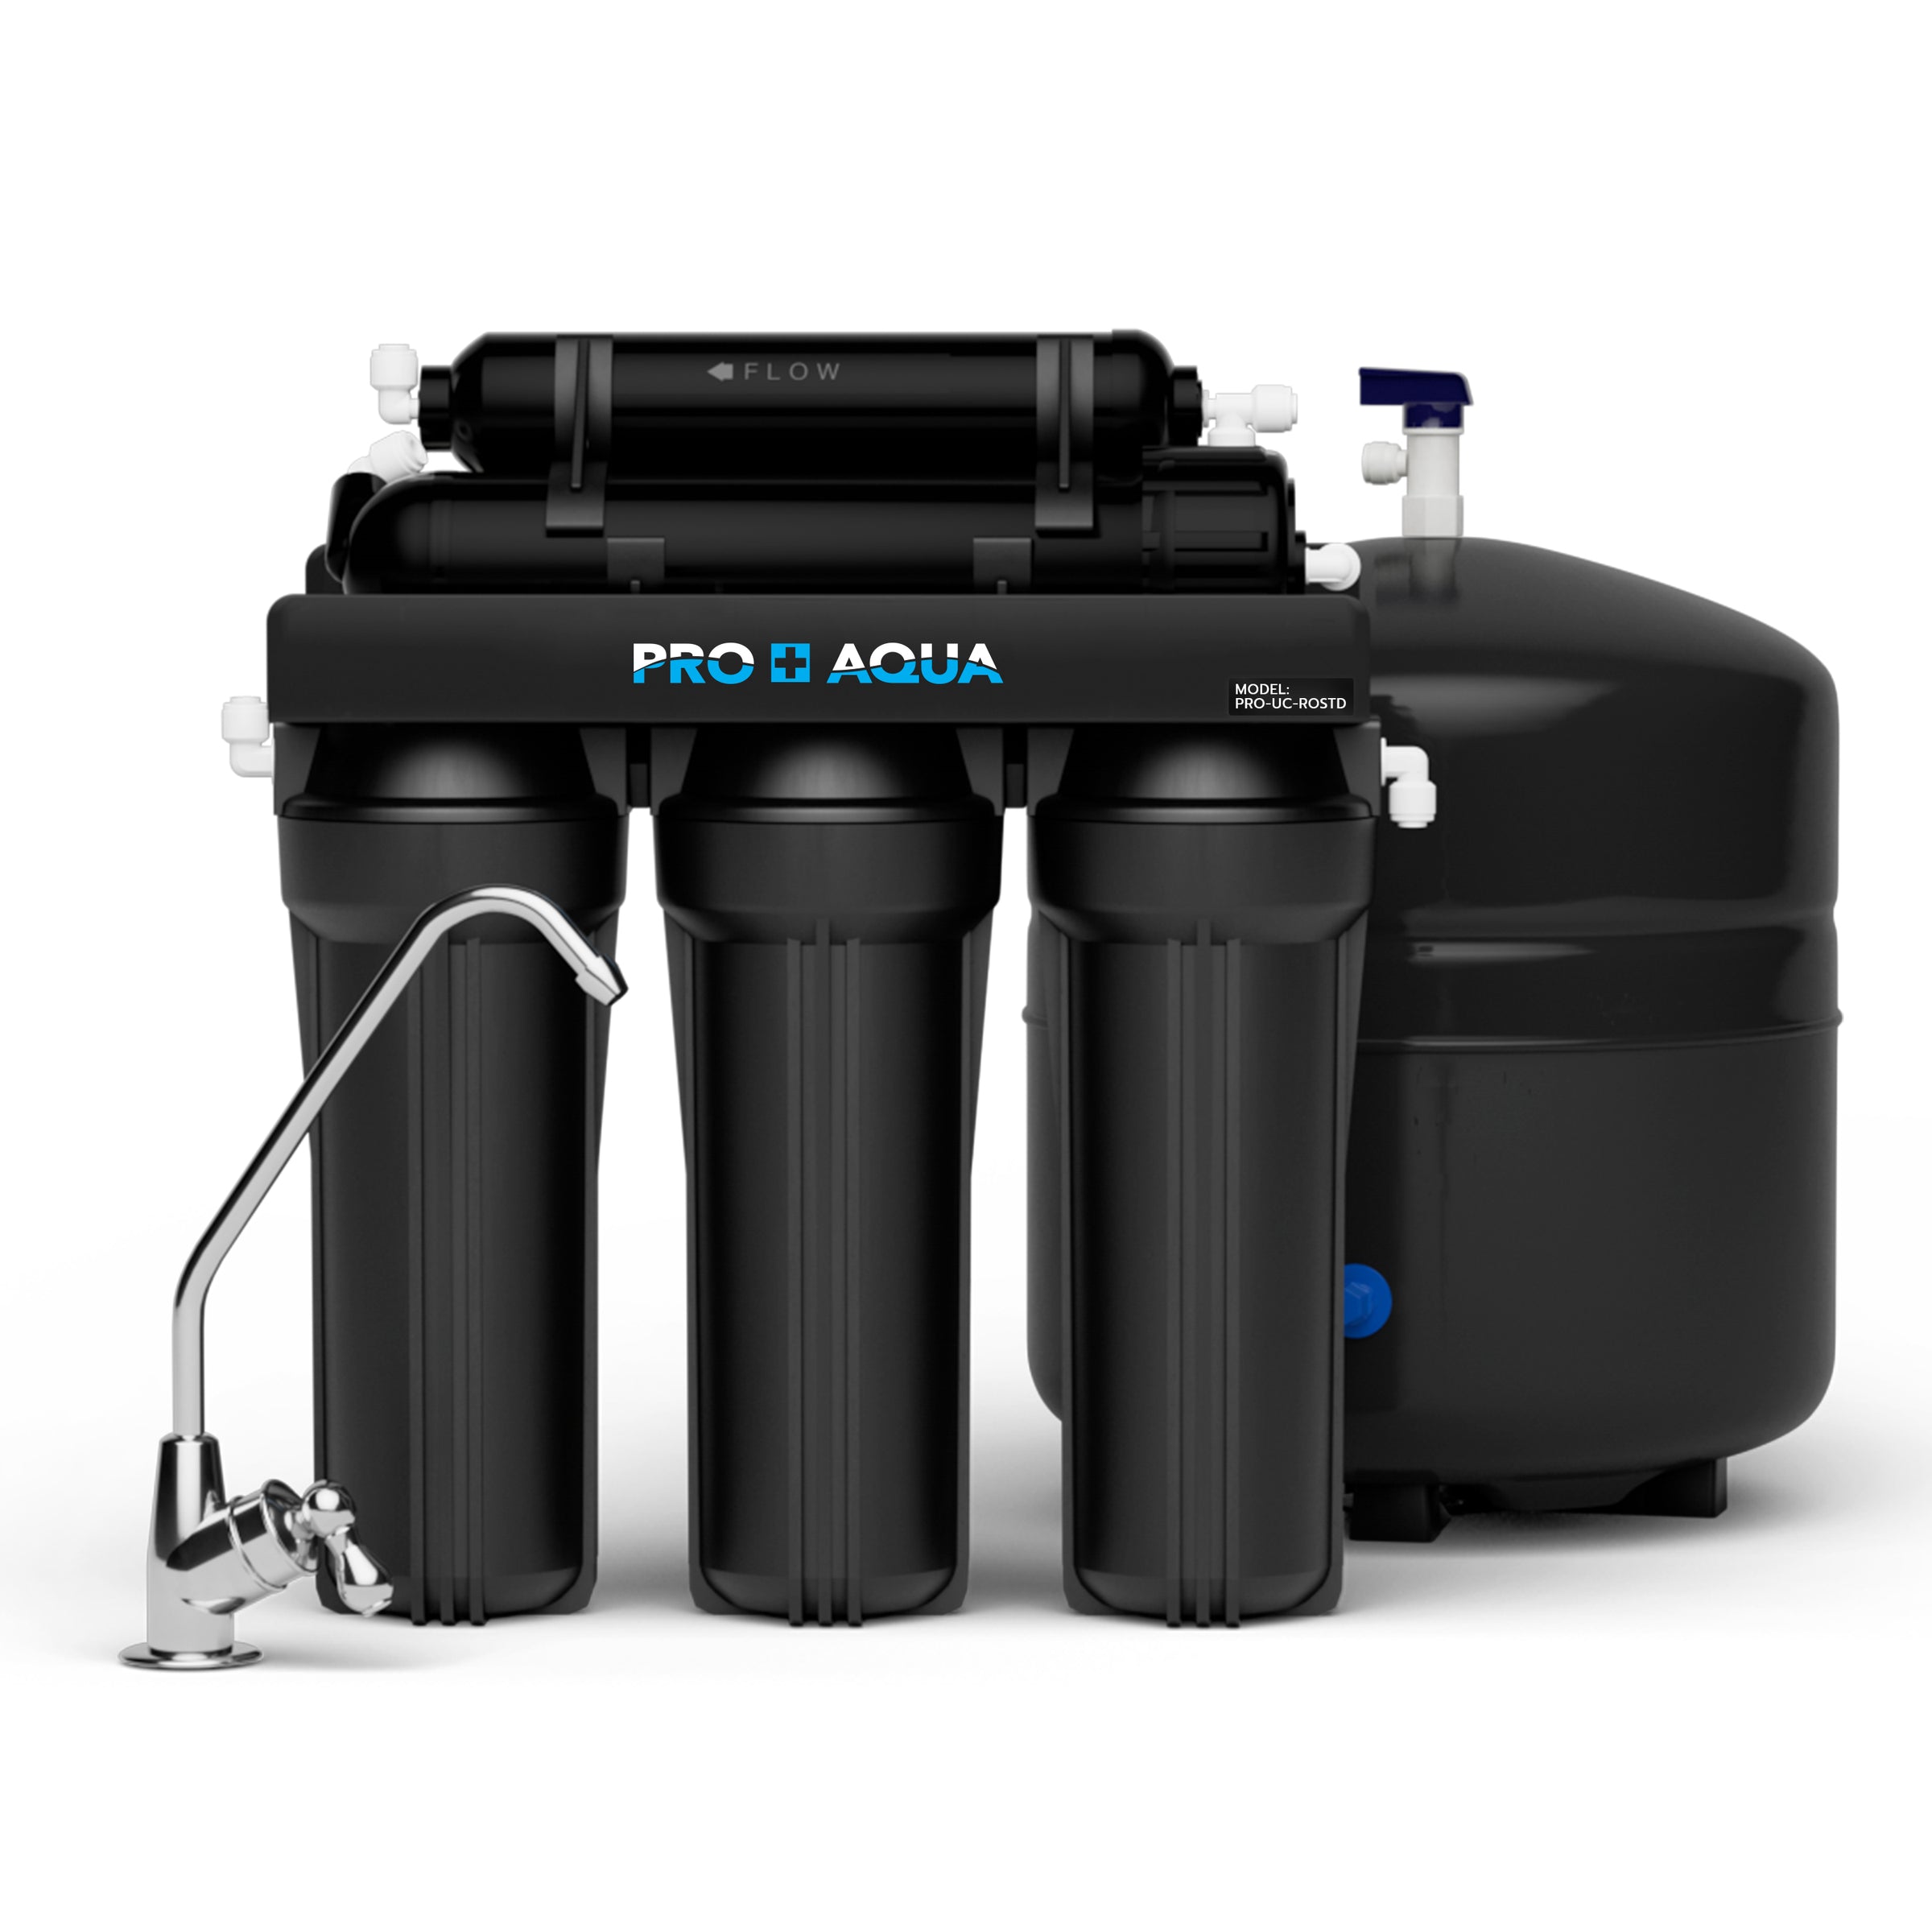 Pro+Aqua Premium 100 GPD Reverse Osmosis System, Fast Flow, 6 gal holding tank, Black $172.47